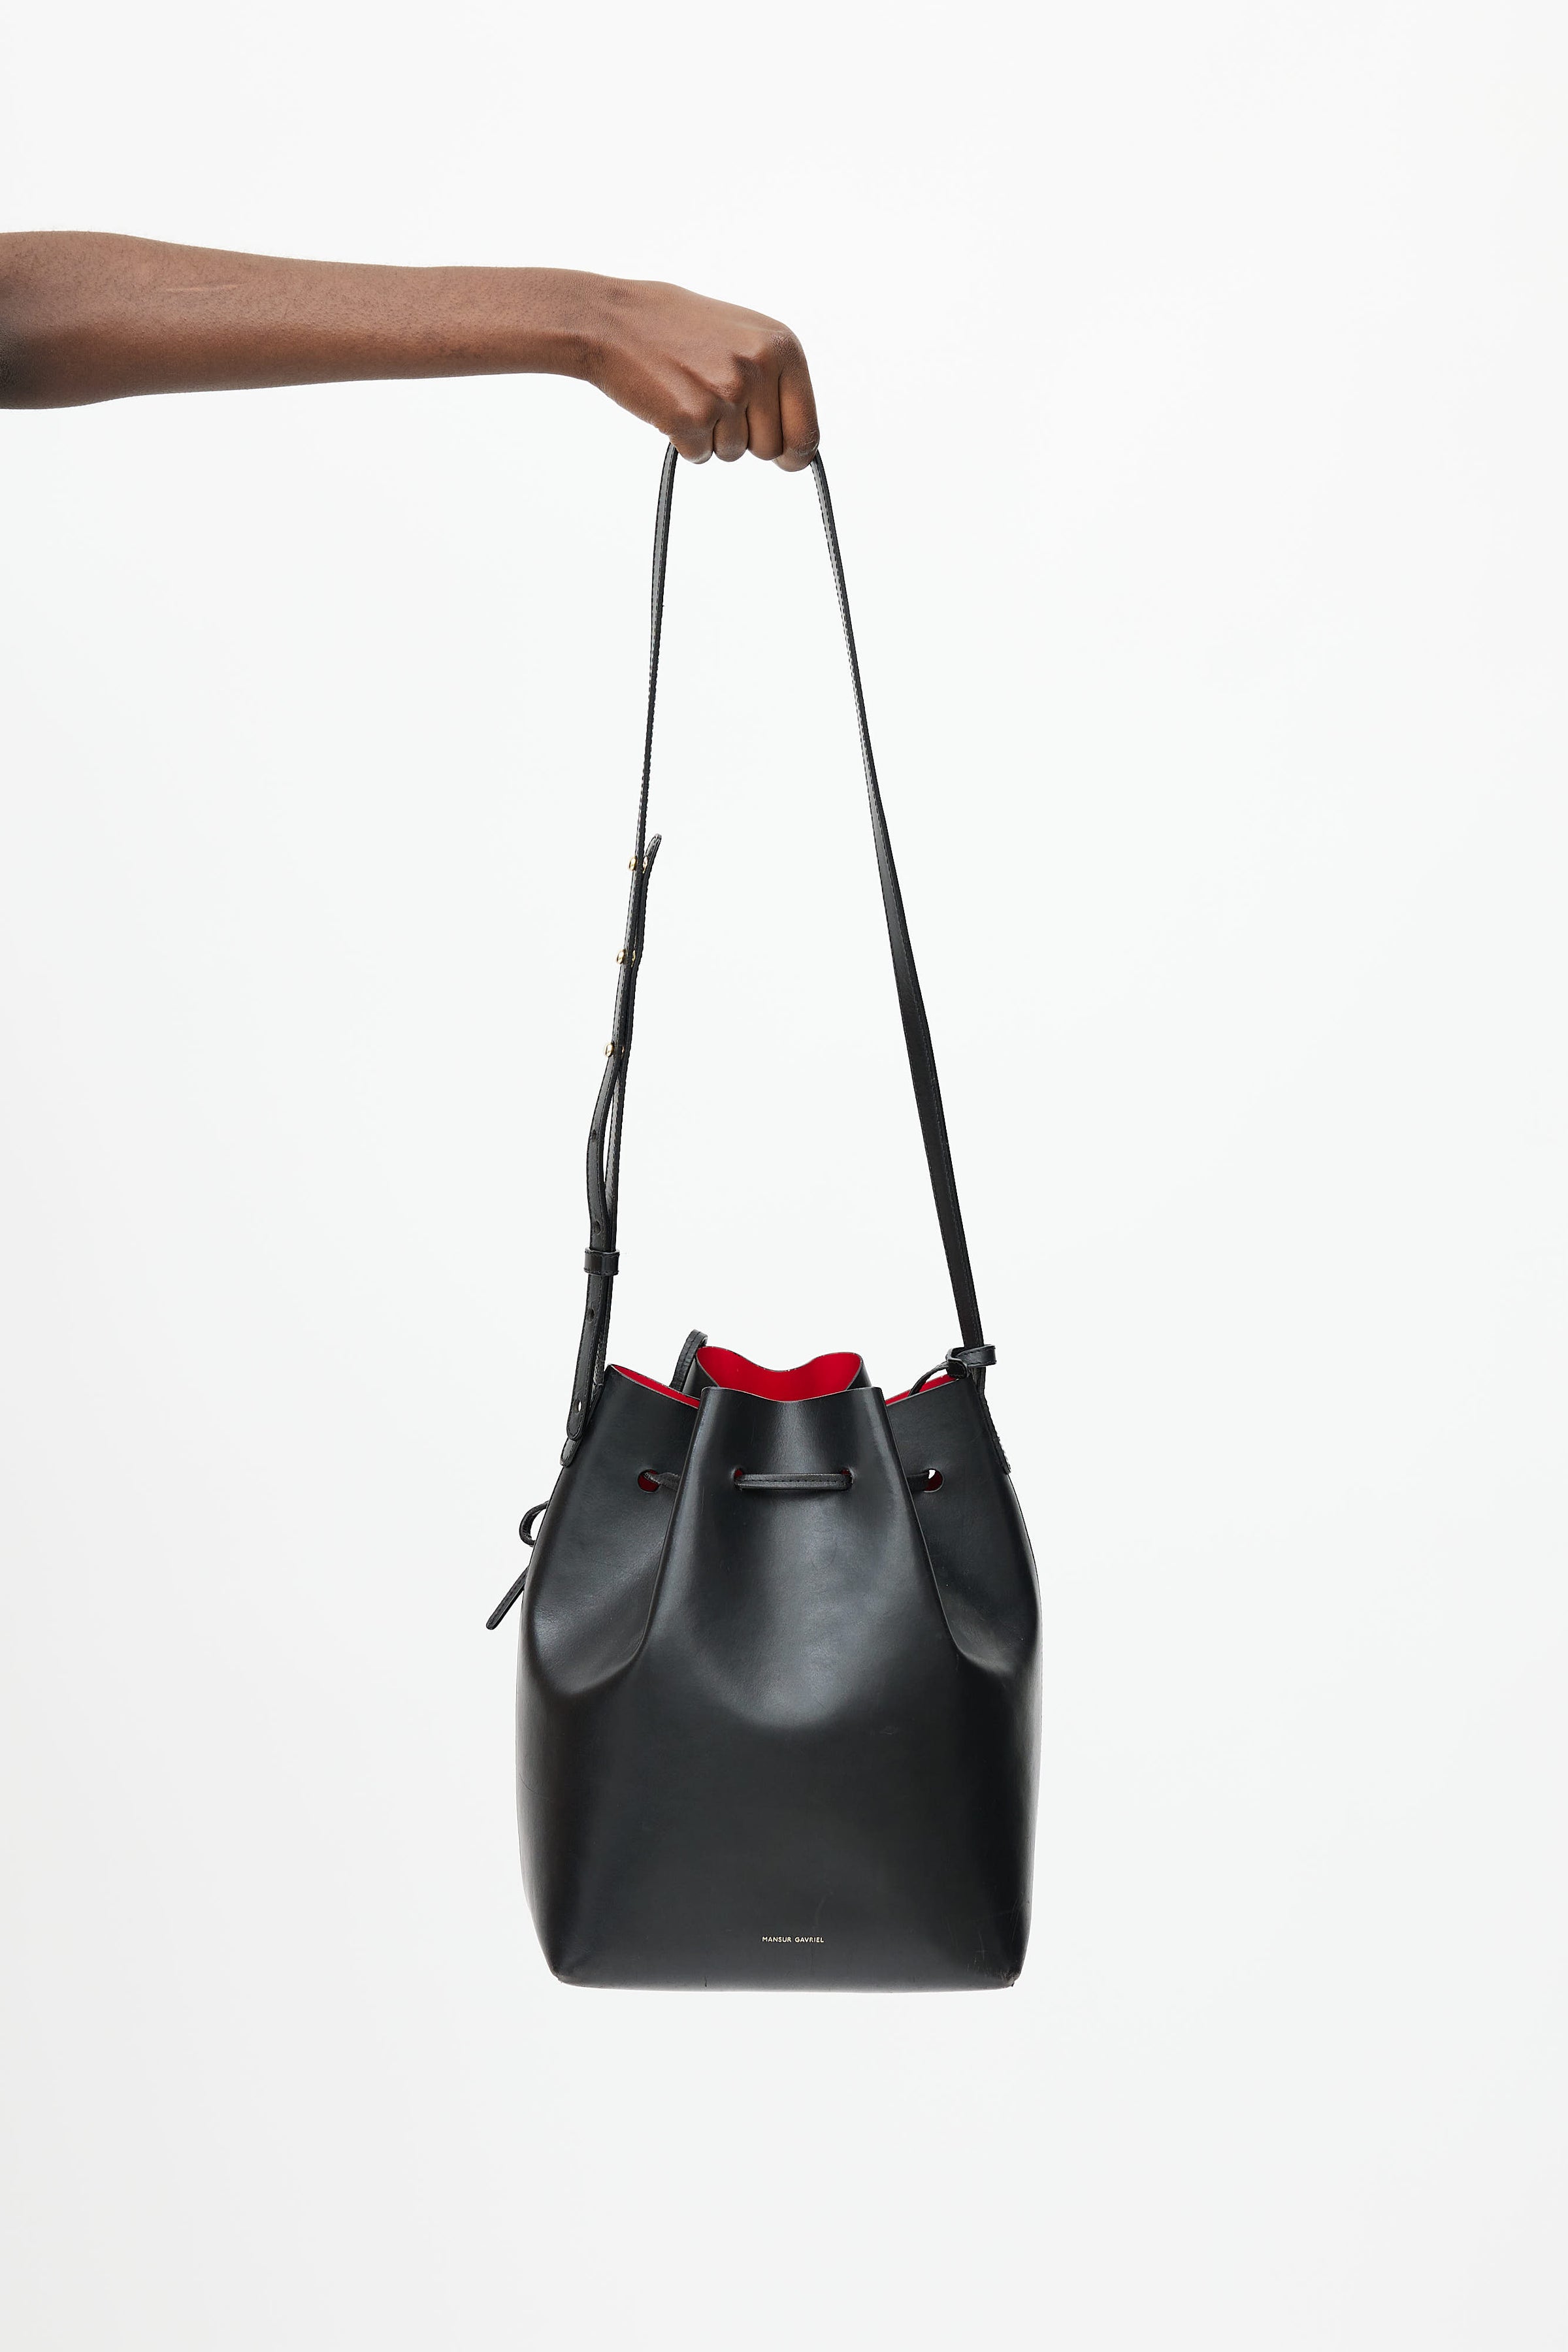 Bag Repair DIY: Mansur Gavriel mini bucket leather handbag restoration 